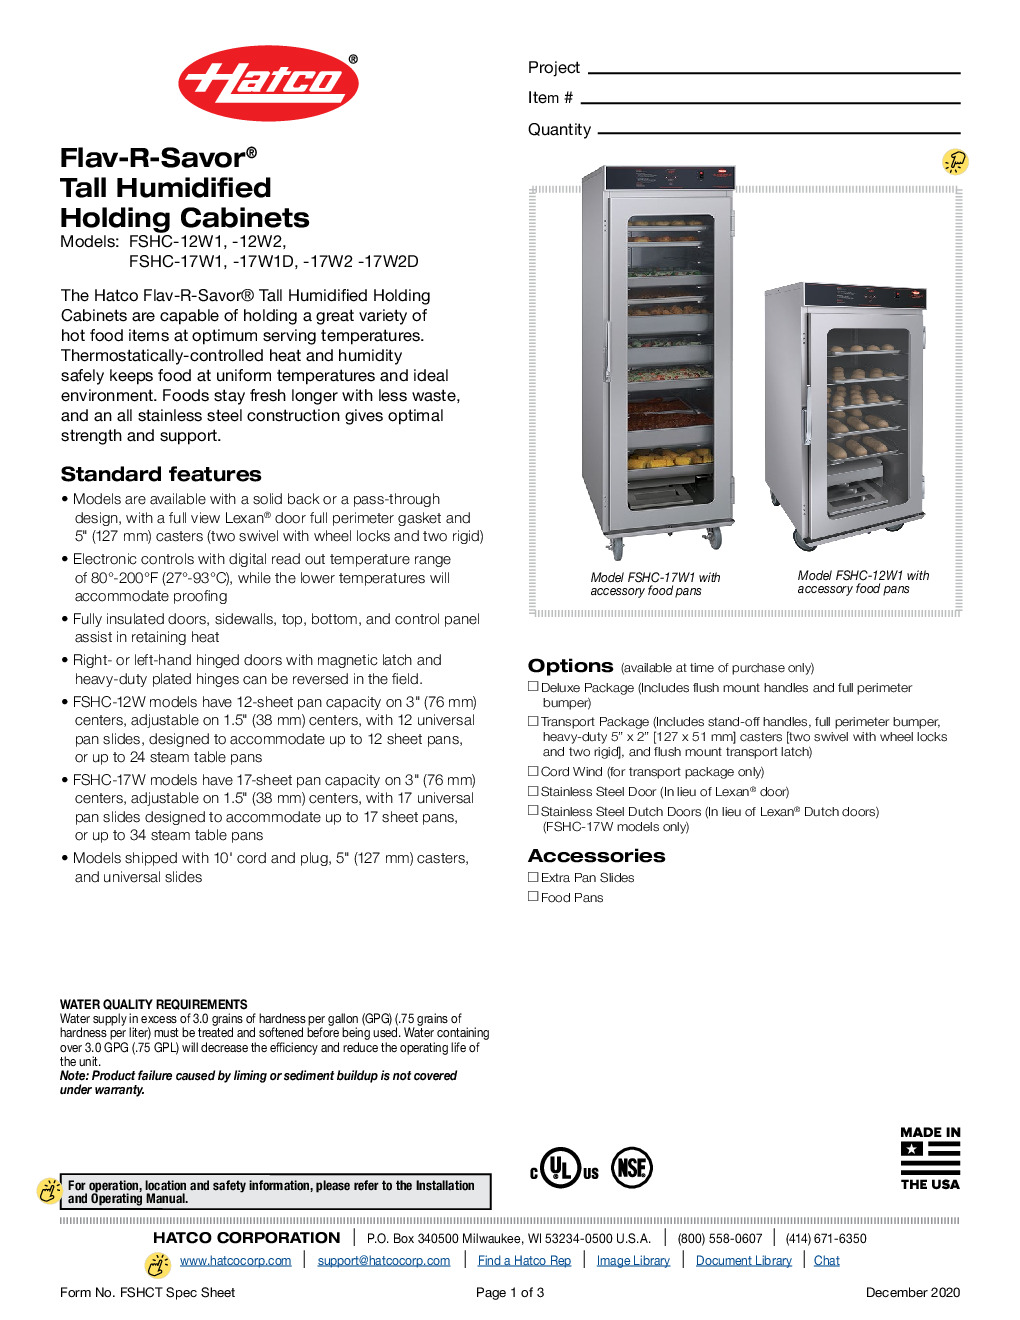 Hatco FSHC-17W1D-120QS Mobile Heated Cabinet